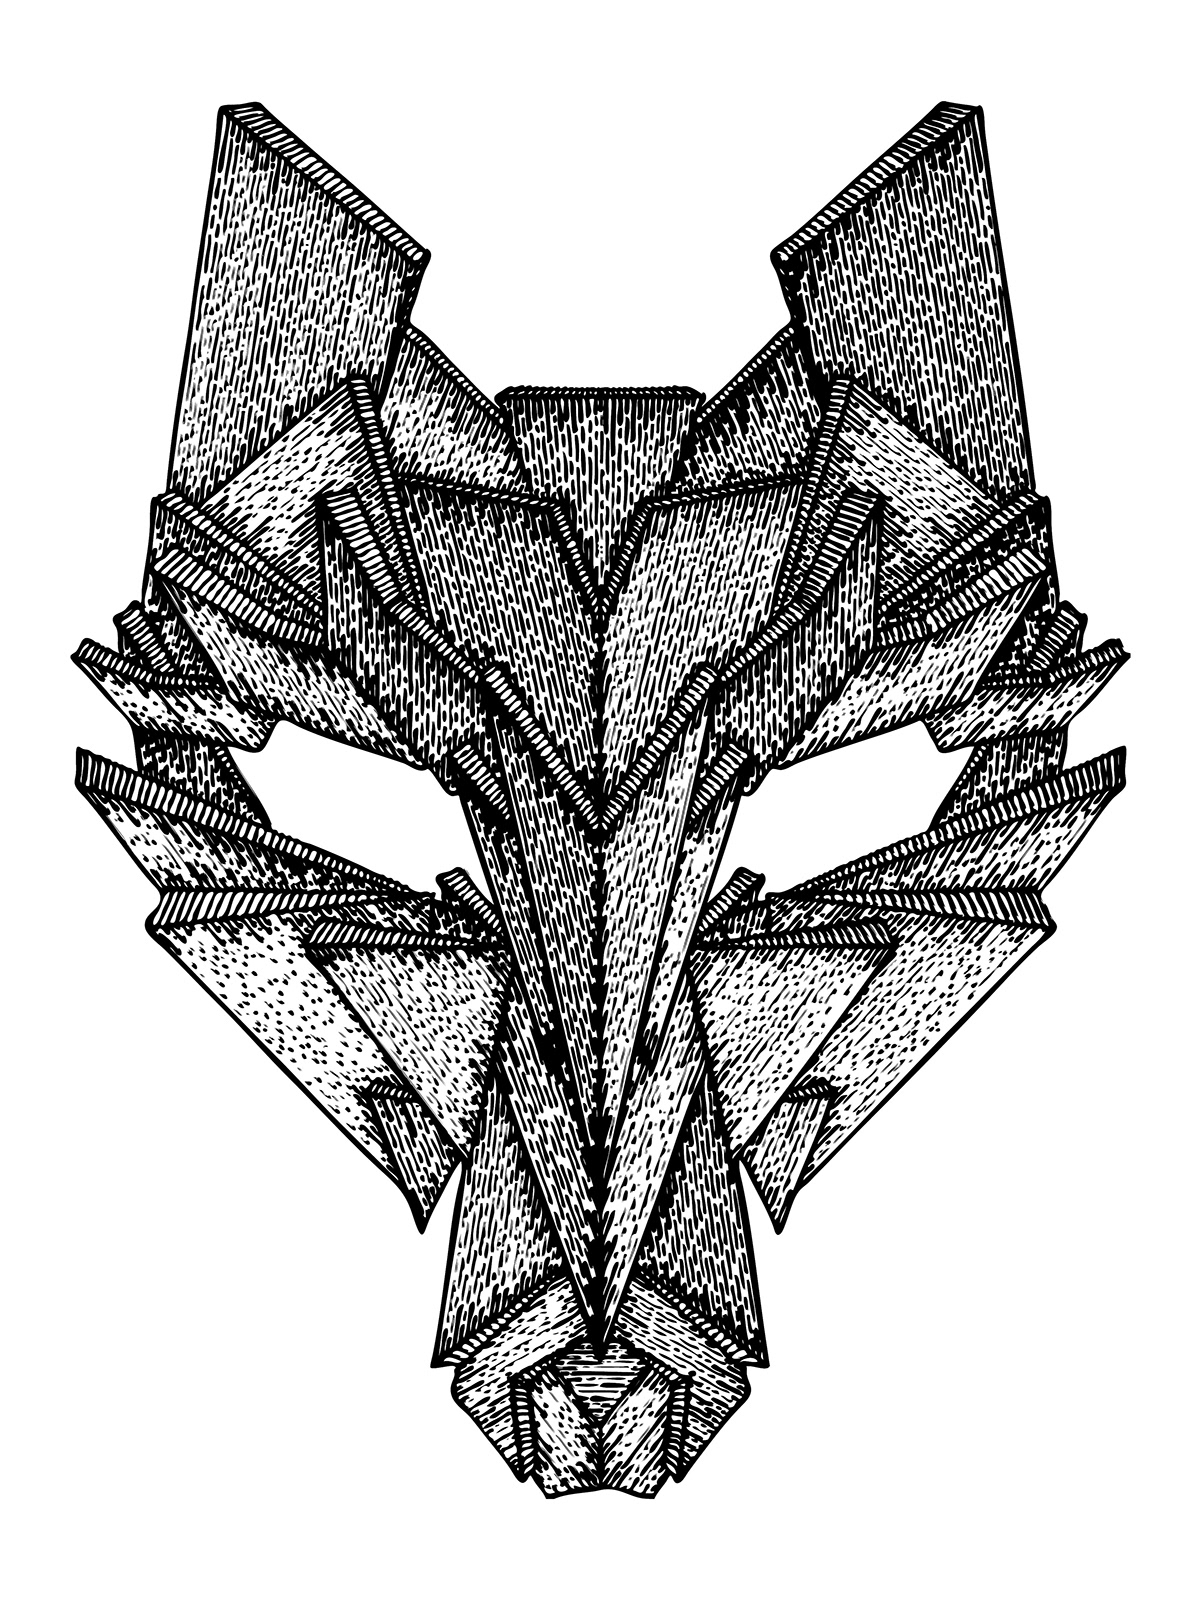 animal  fox  mask  Illustration  lion  Black  white  Shape  geometry  drawing  design  nature